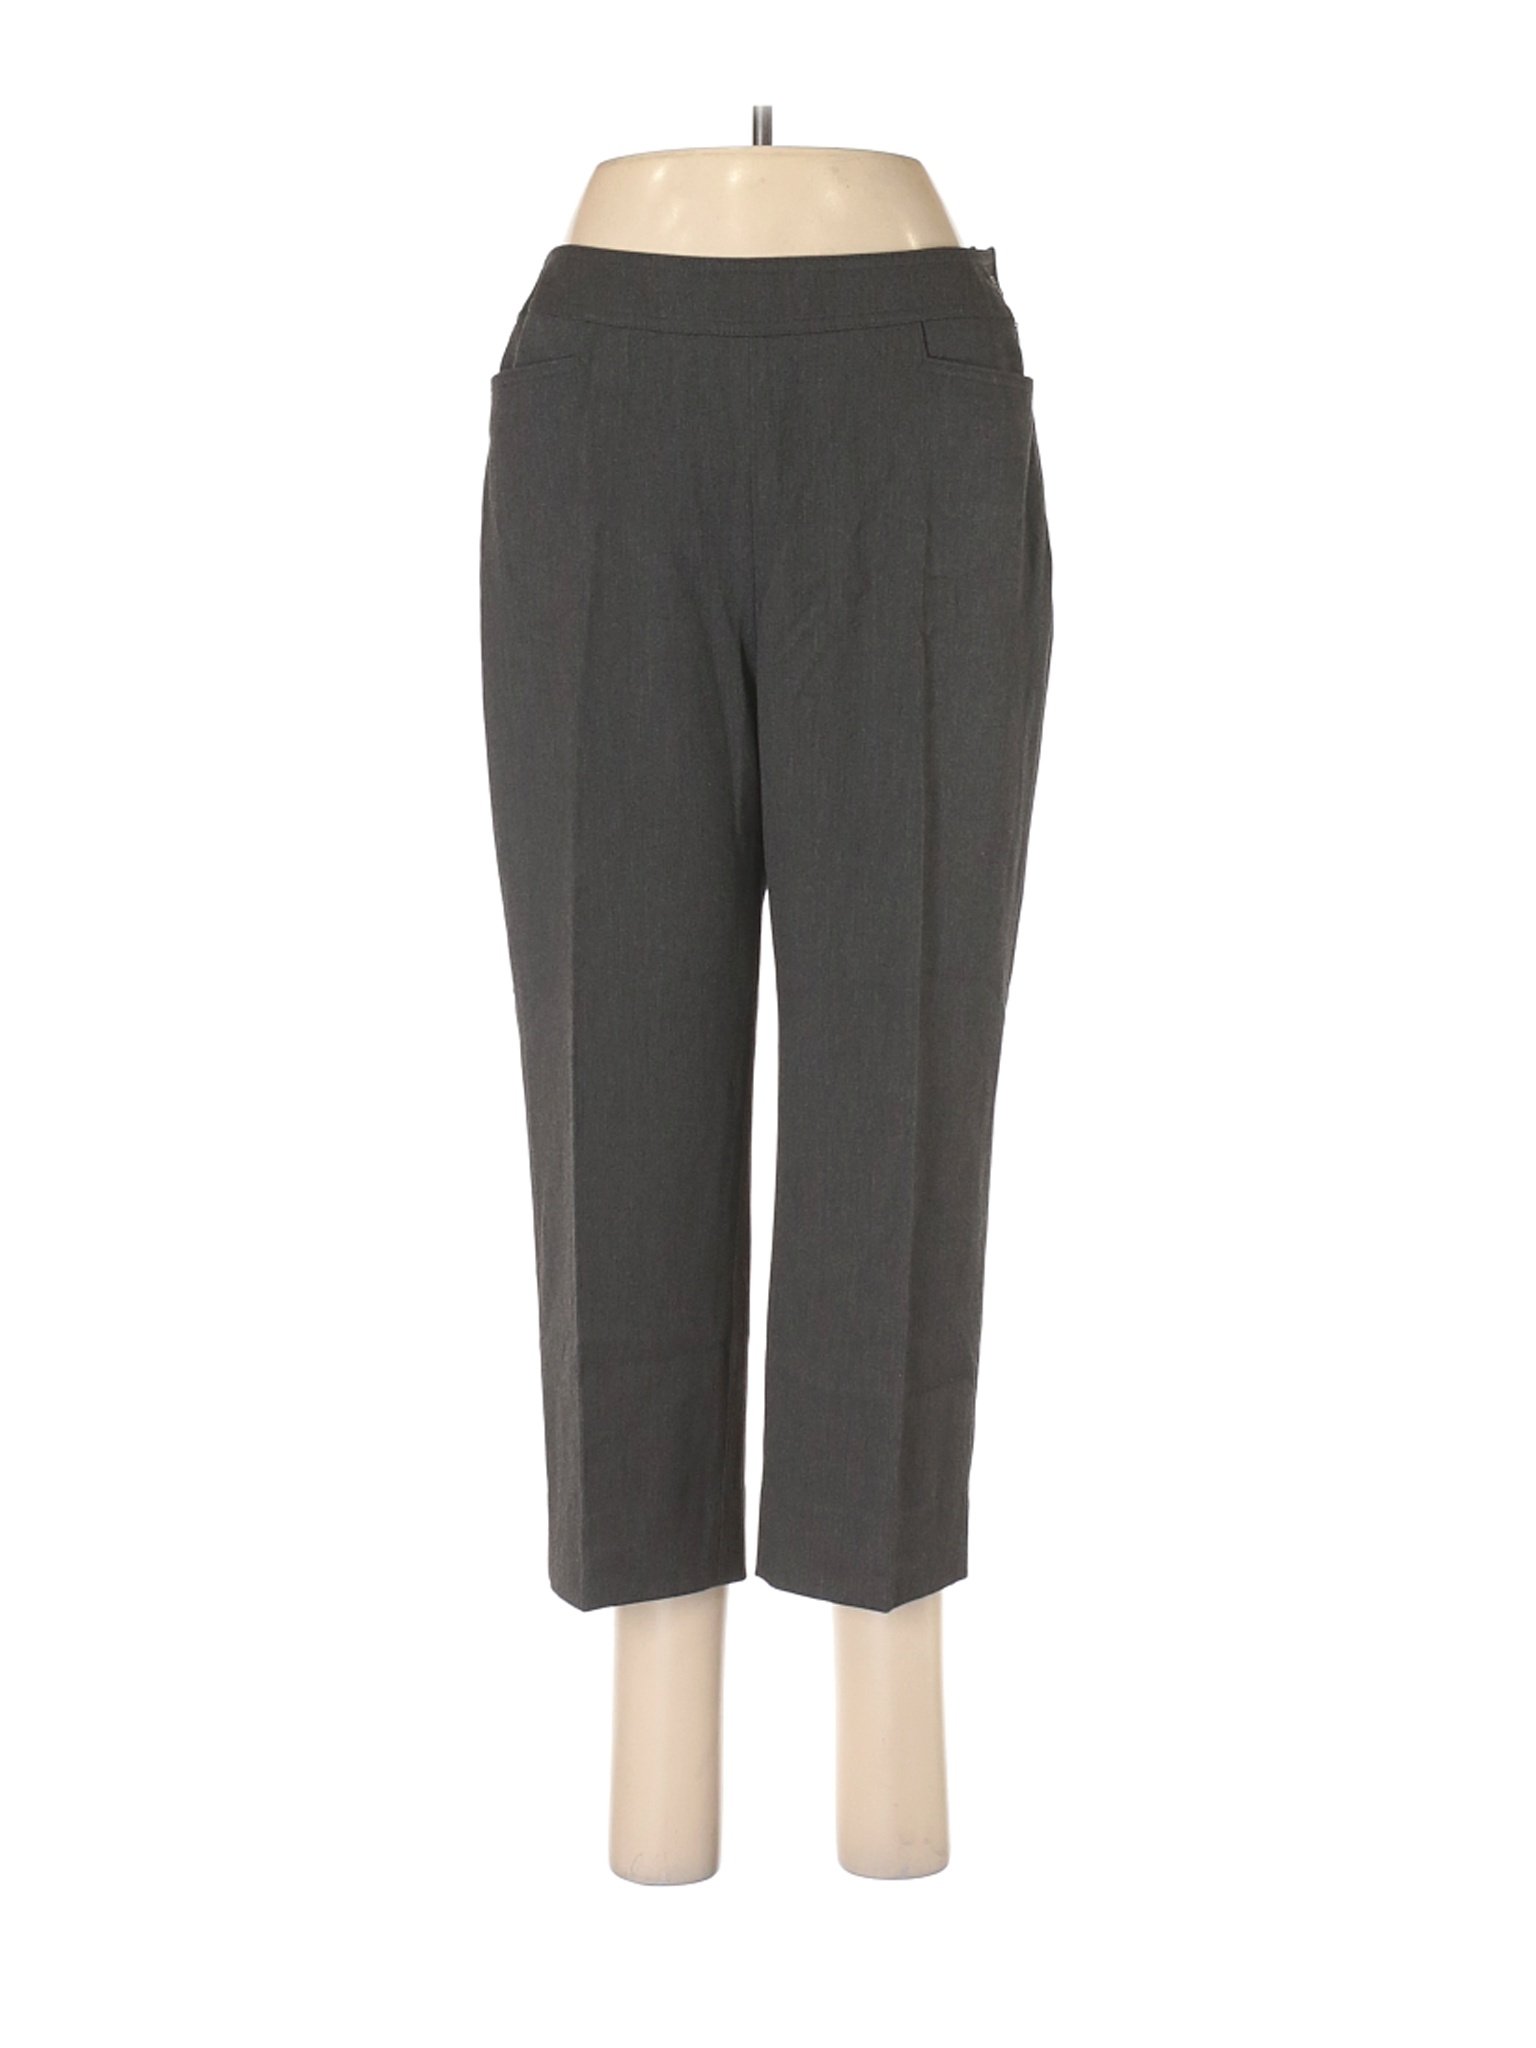 Thalian Women Gray Dress Pants 8 | eBay